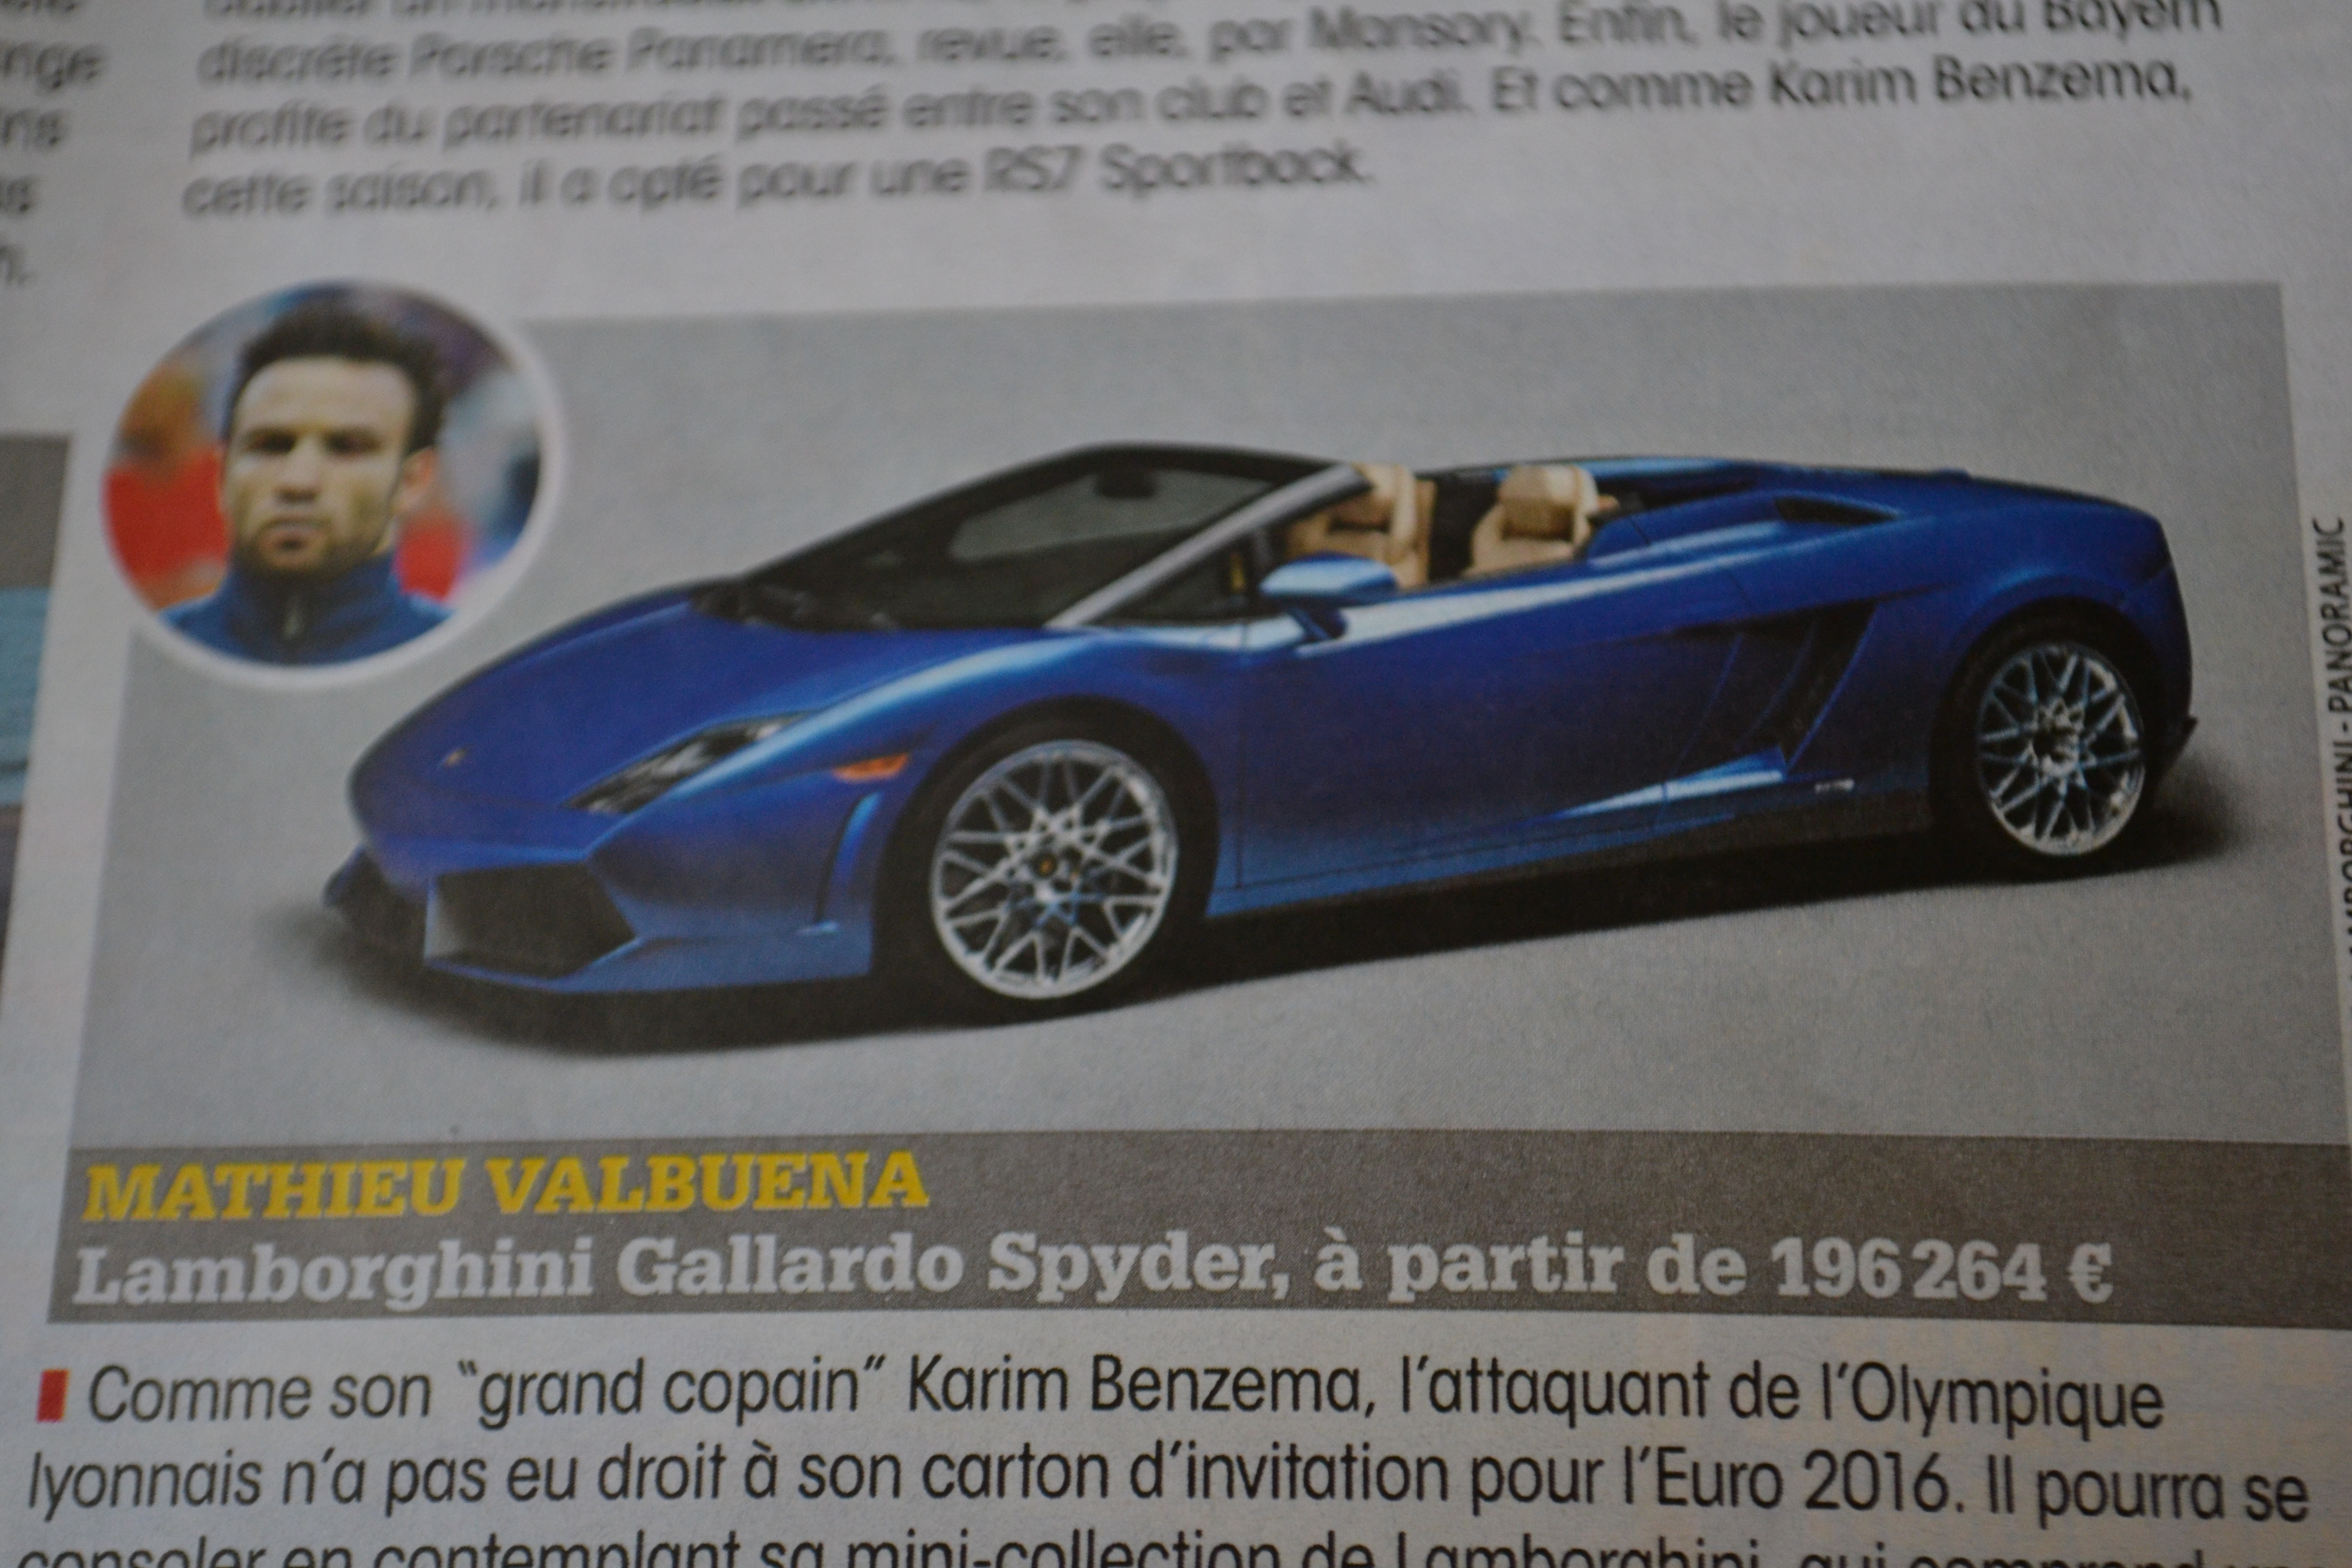 Mathieu Valbuena possède deux Lamborghini